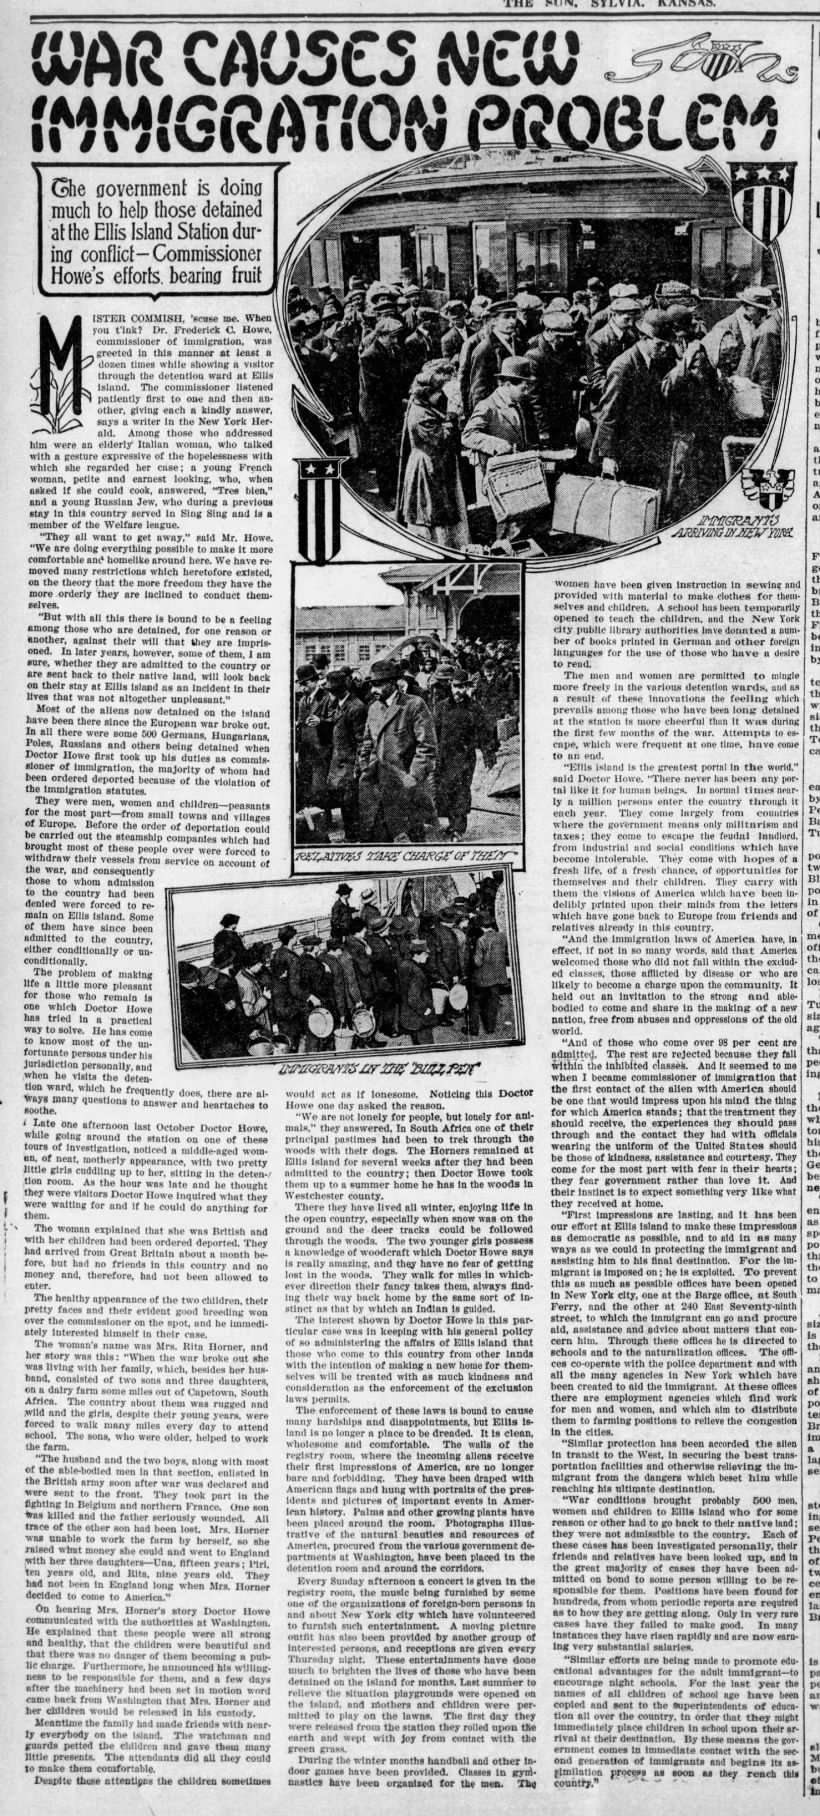 World War I causes immigration problems at Ellis Island